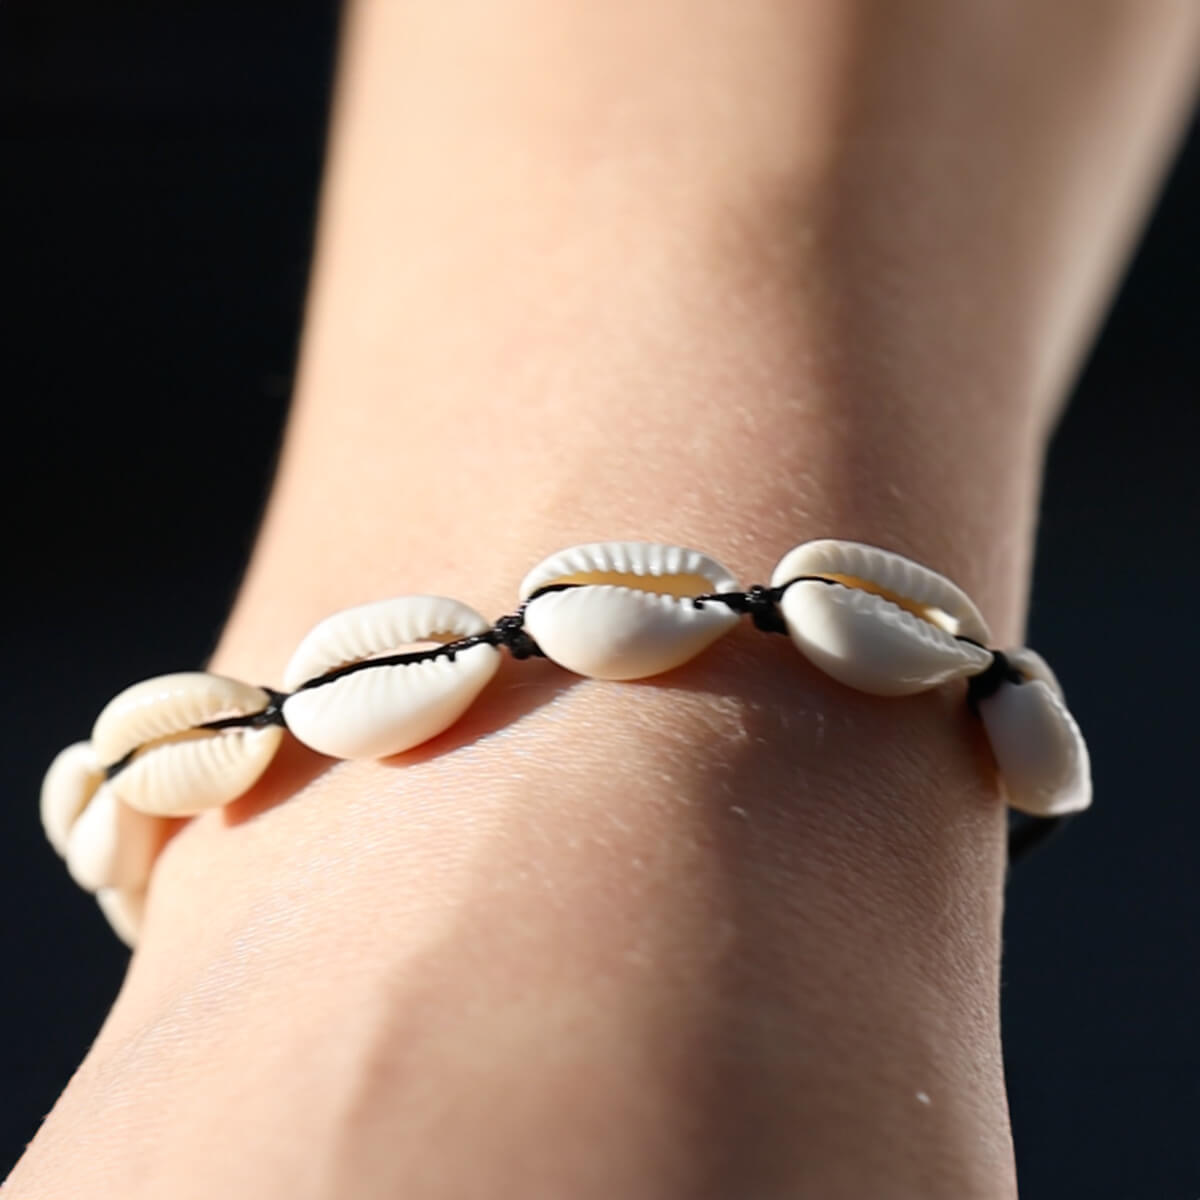 Clam bracelet